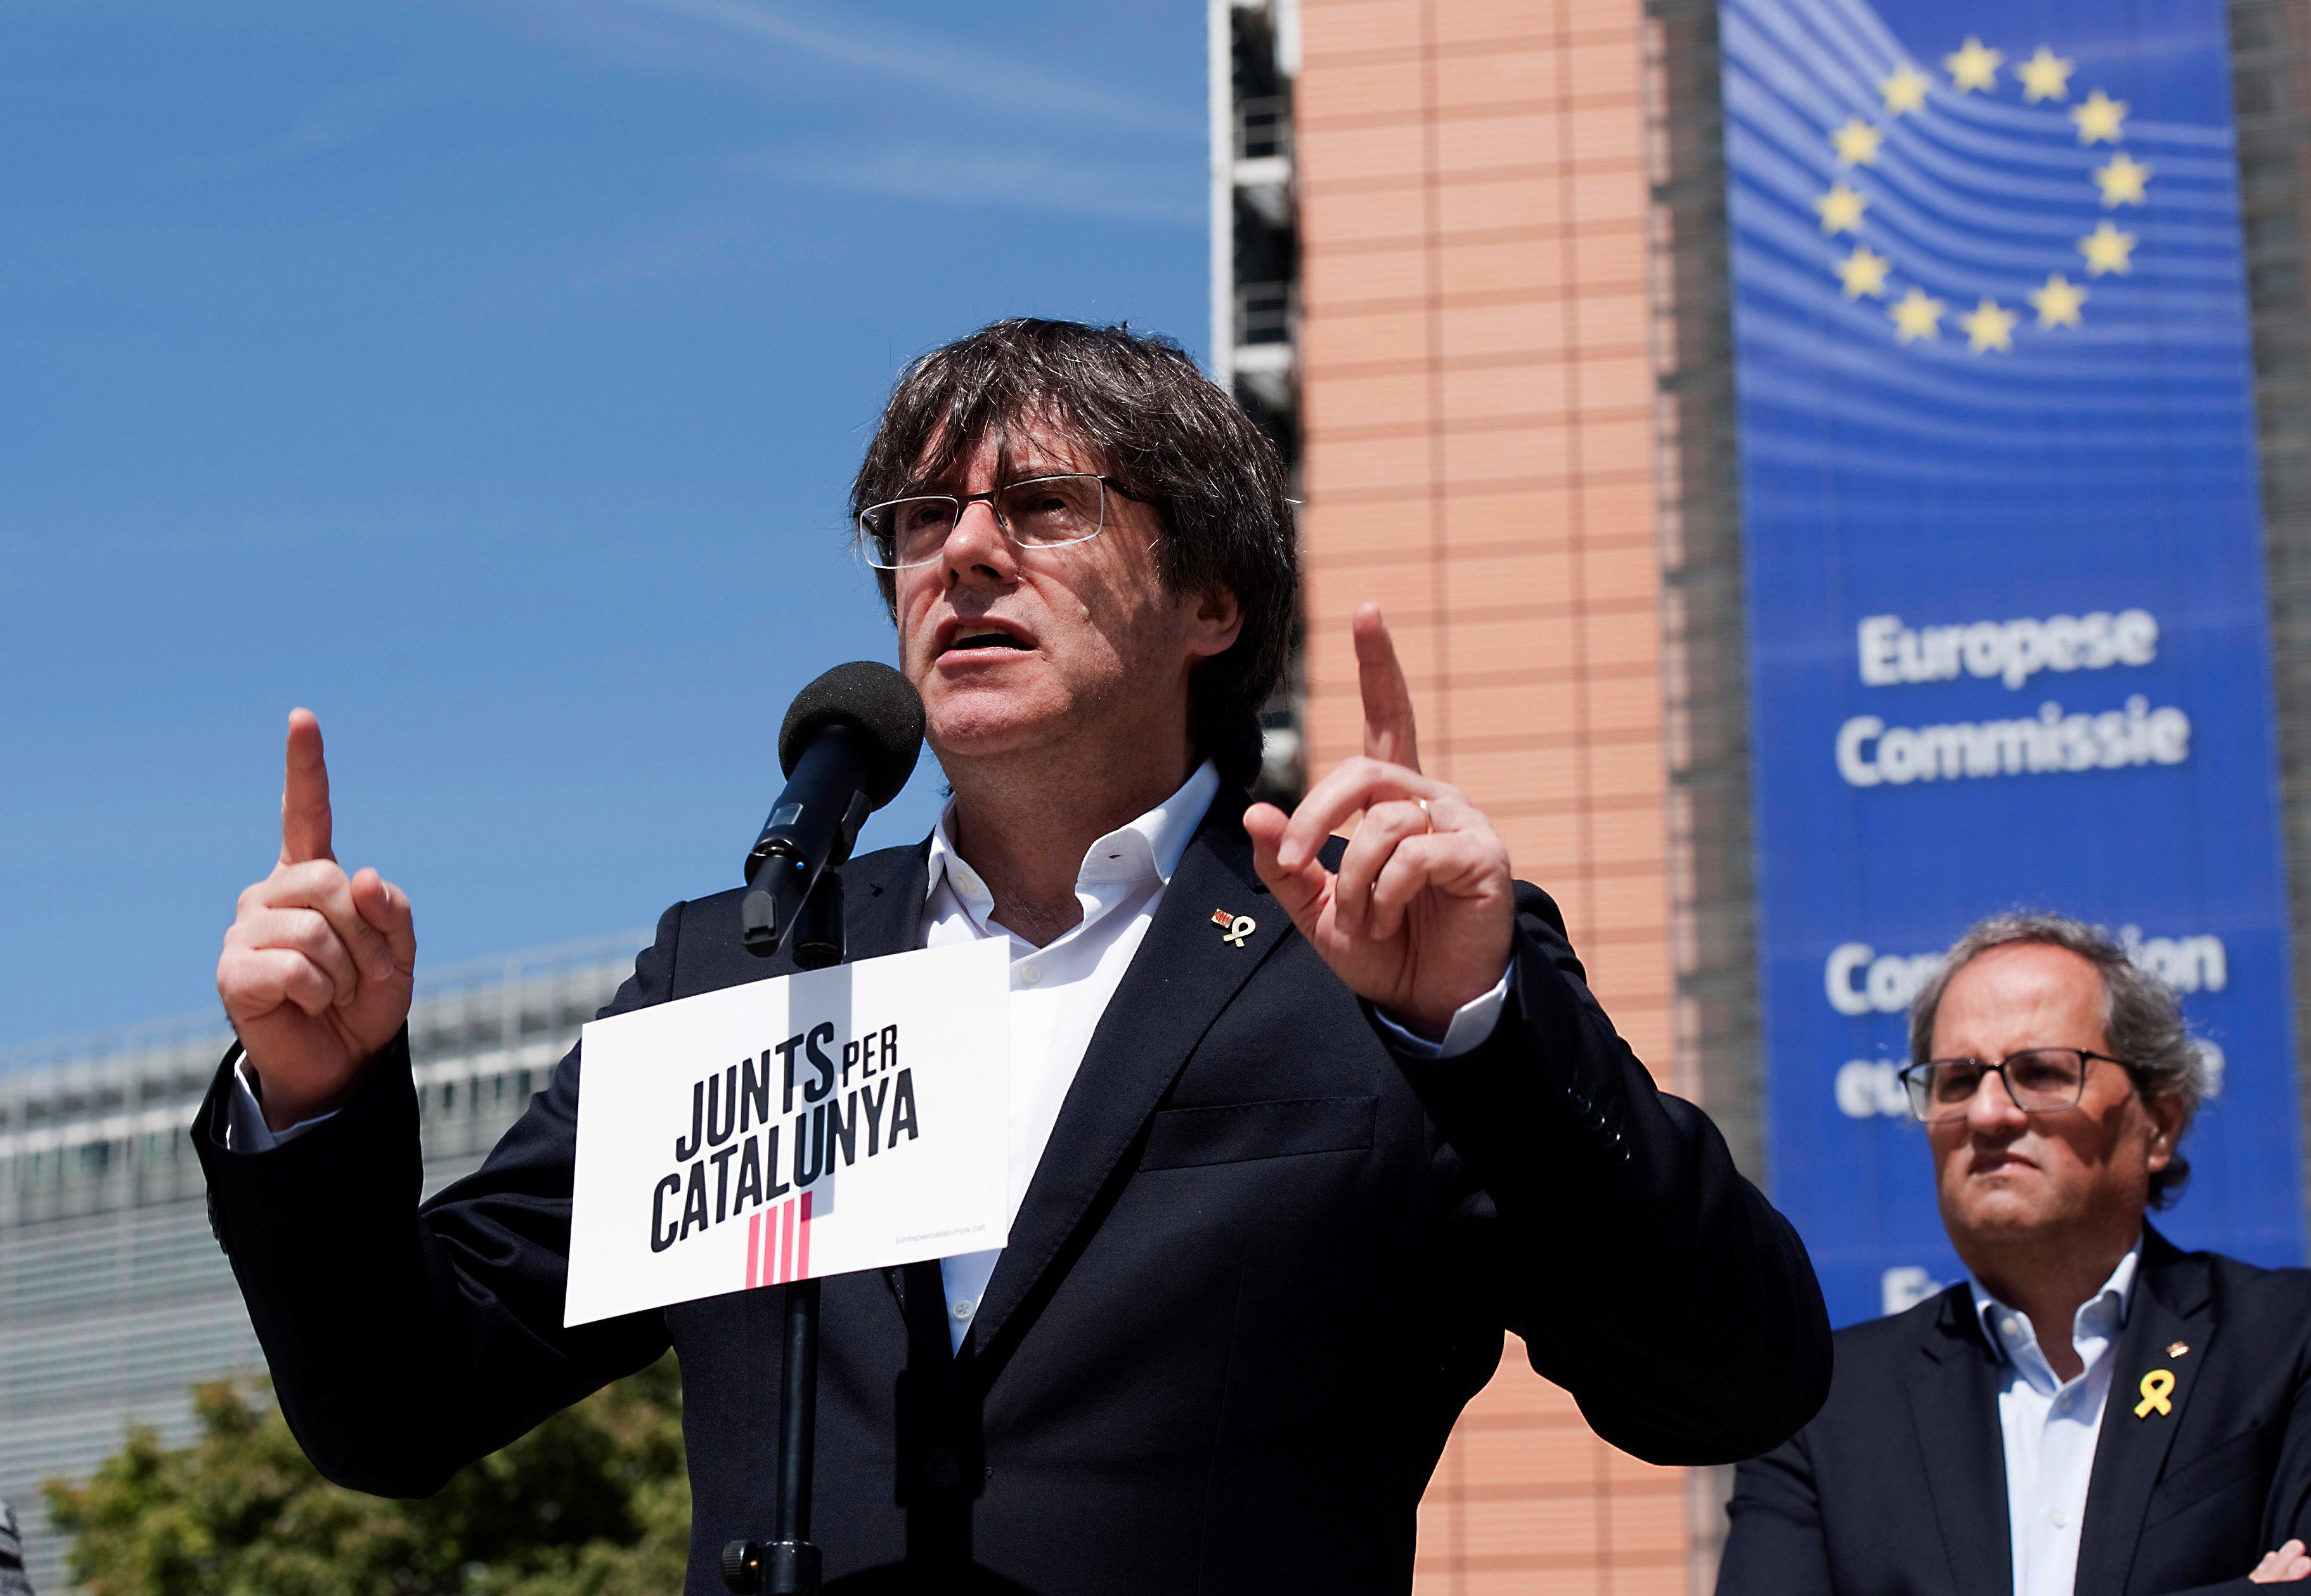 Puigdemont, Comín file formal complaint over European Parliament's "discriminatory treatment"